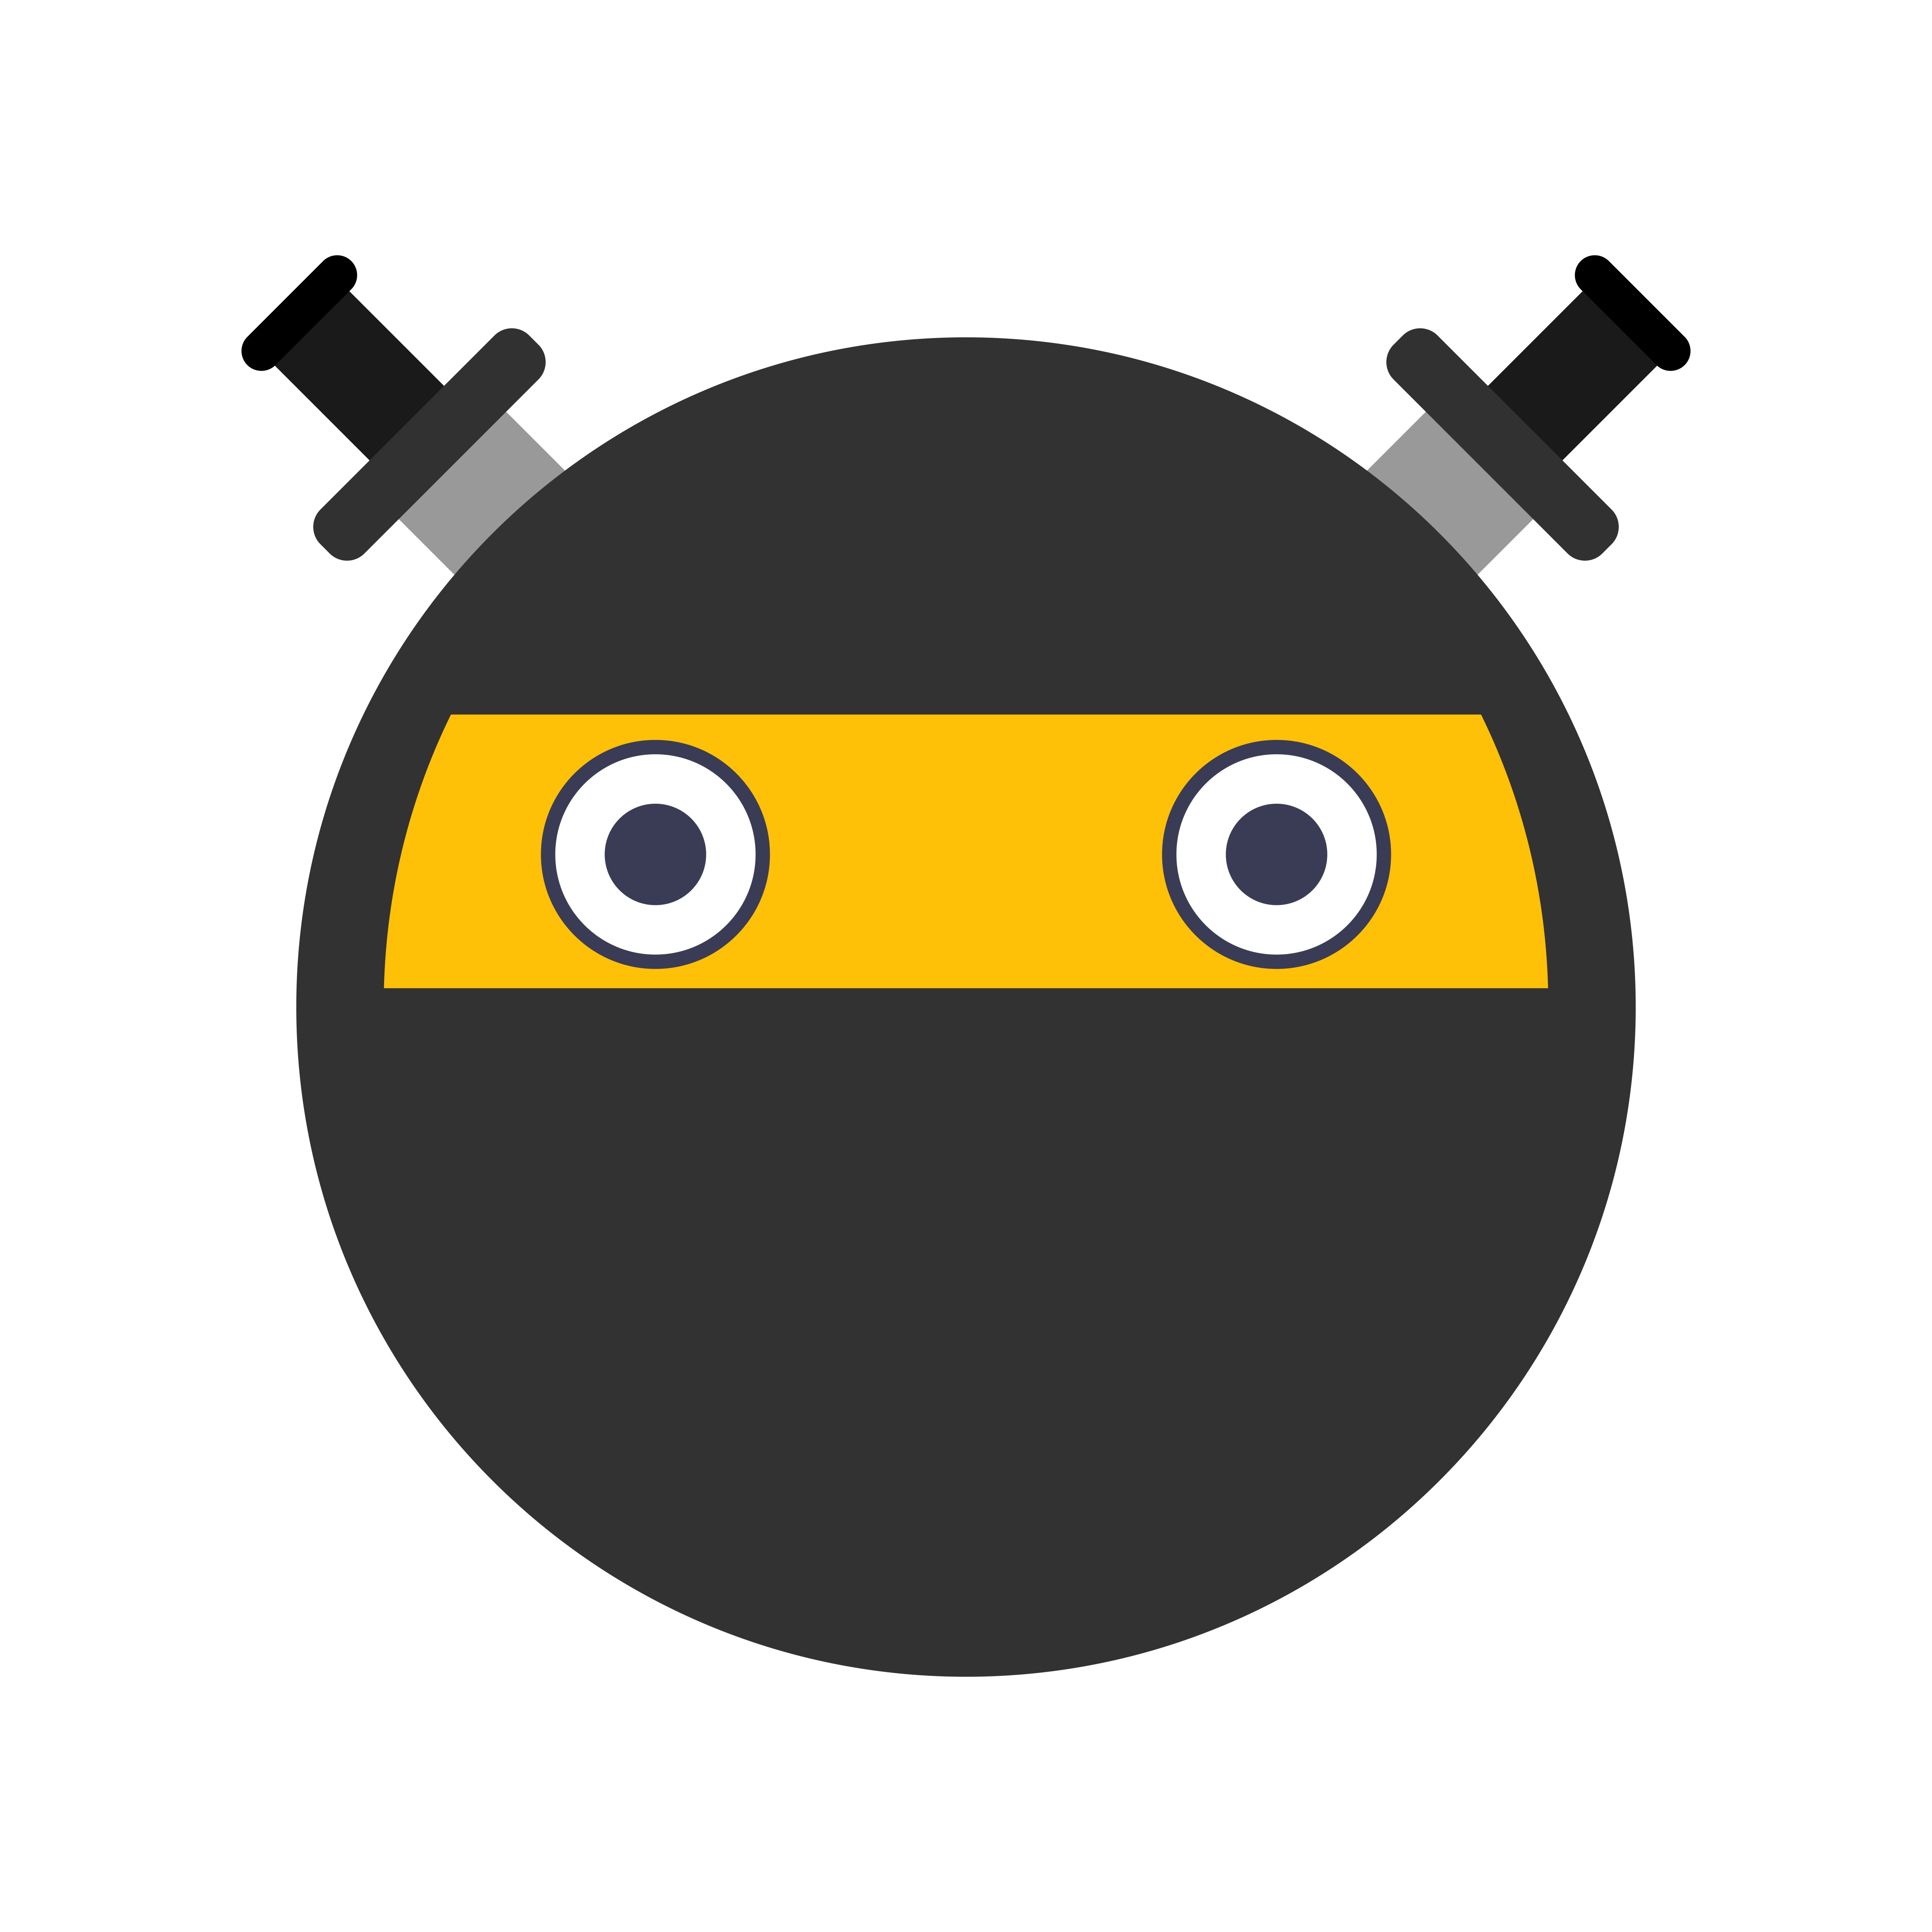 Download Ninja Emoji Vector Icon - Download Free Vectors, Clipart Graphics & Vector Art